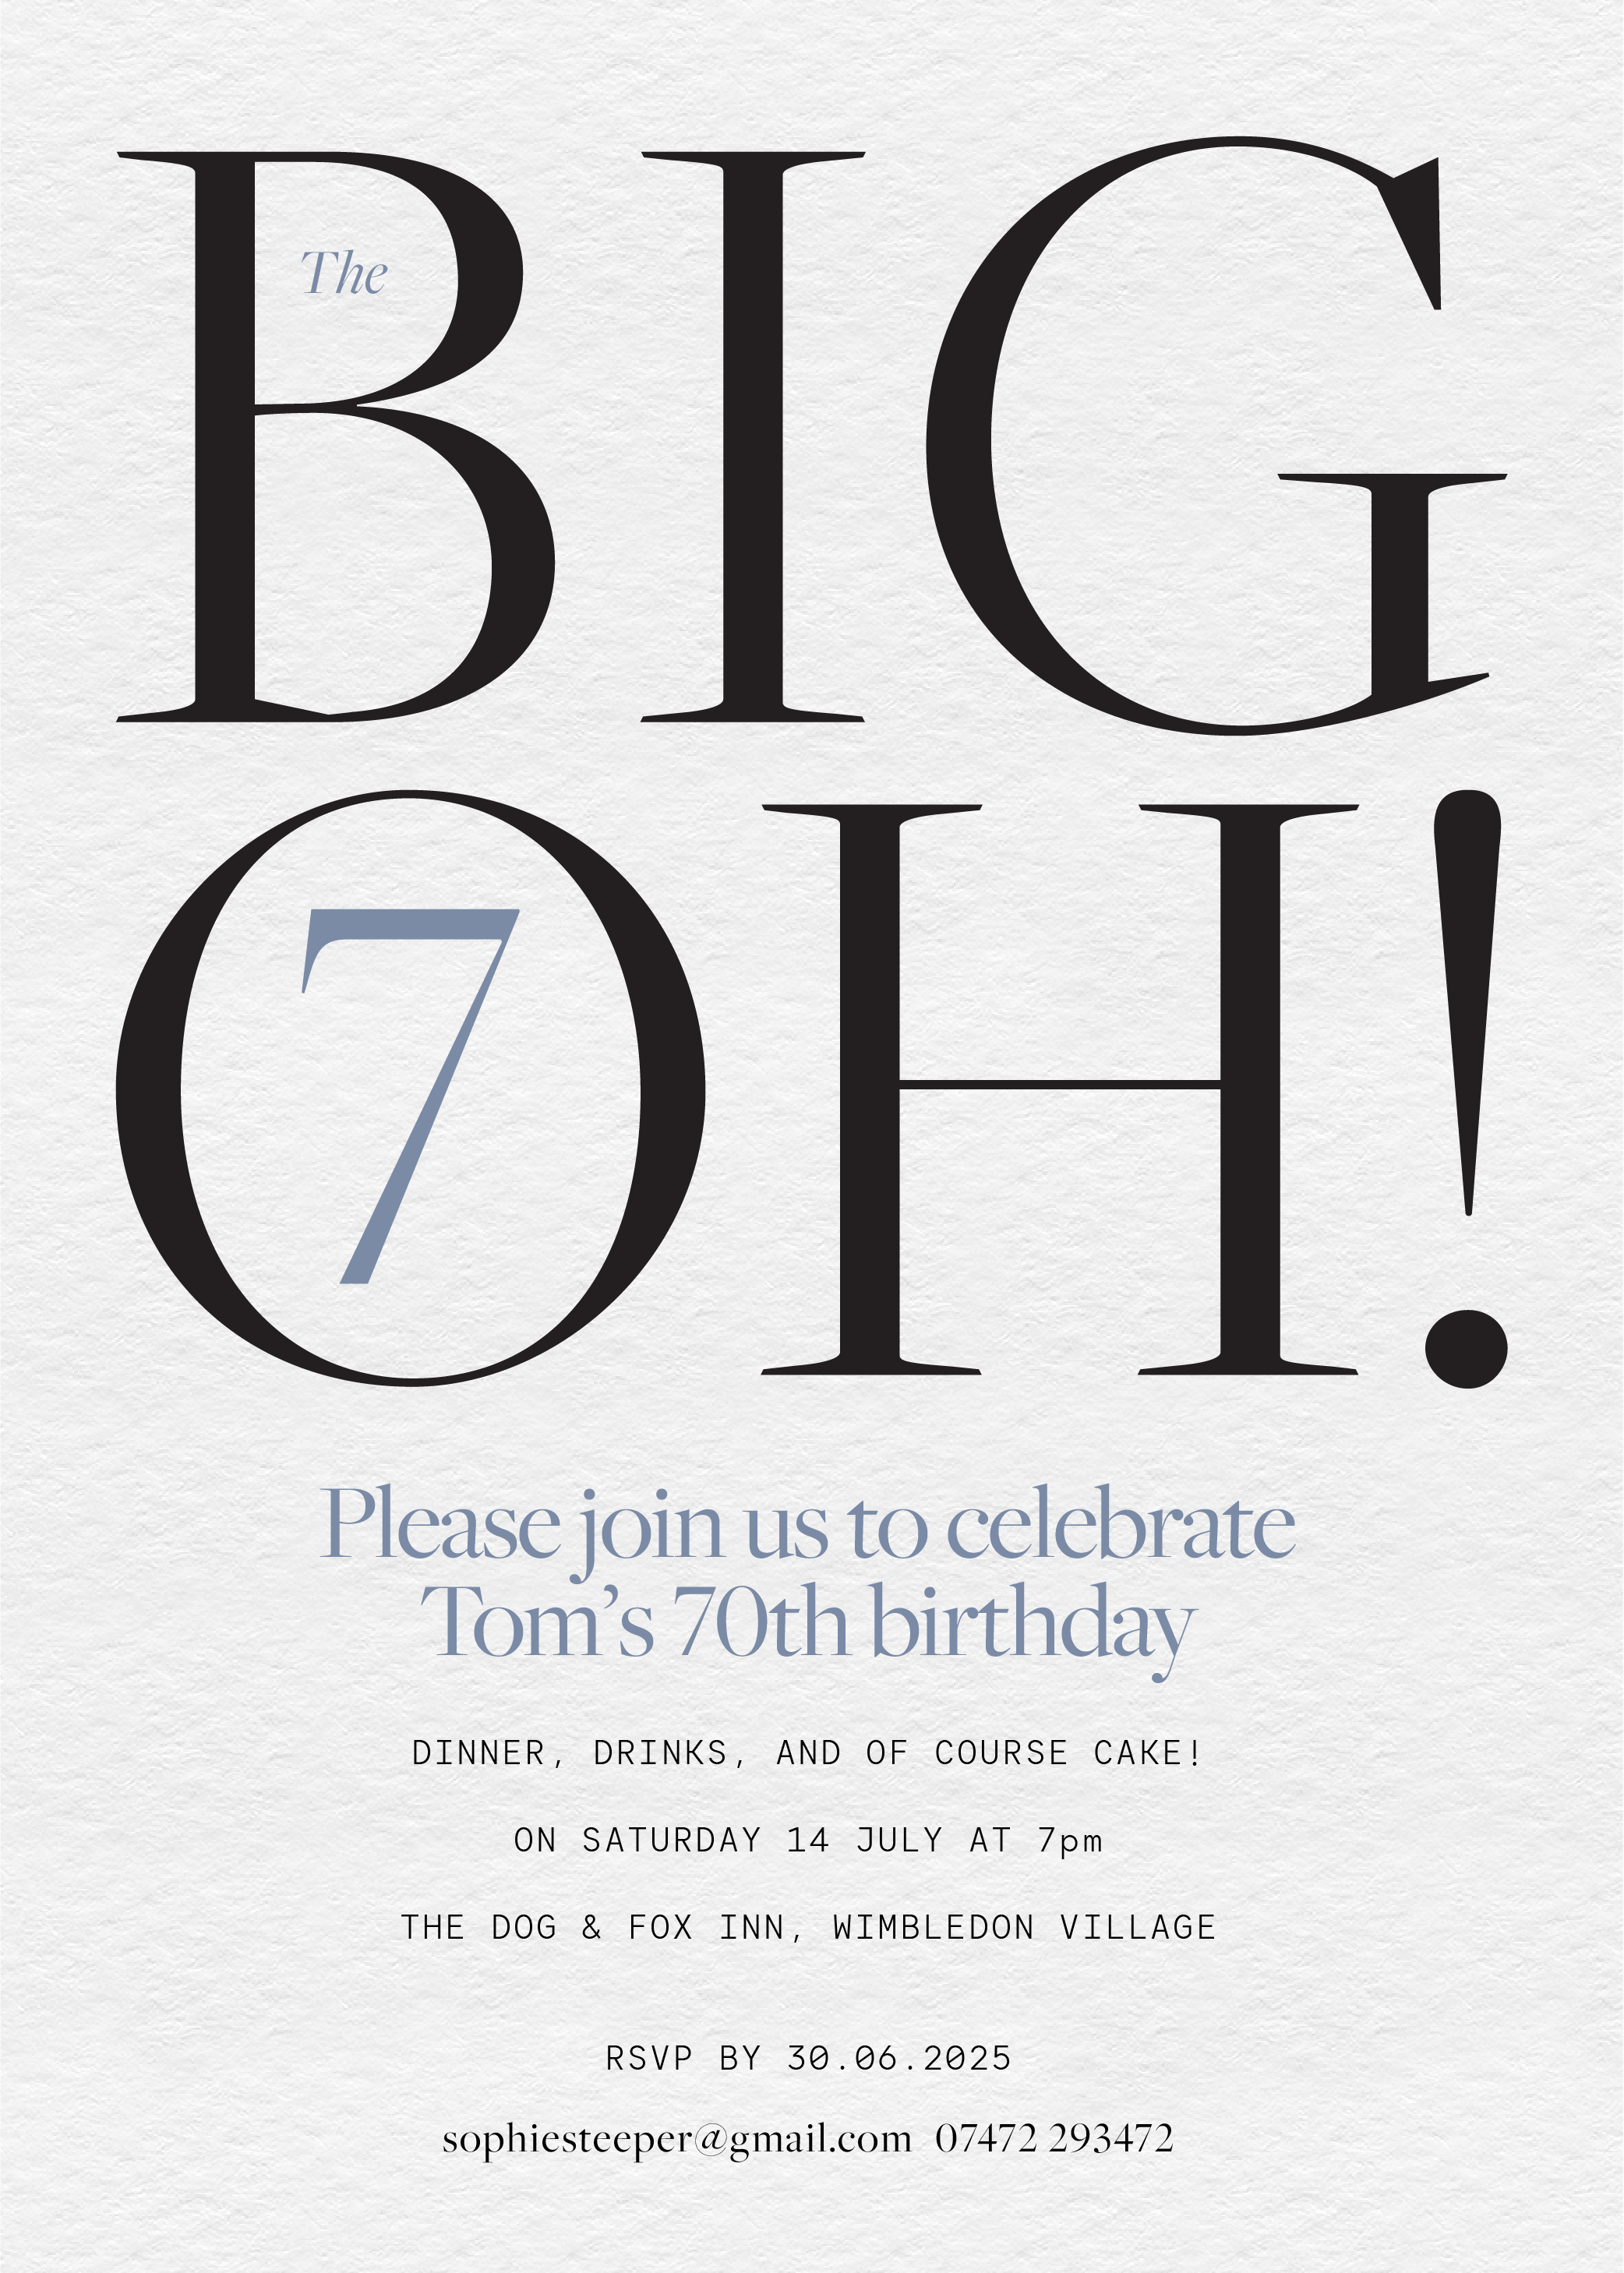 Tom's Big Oh Invite — Printed